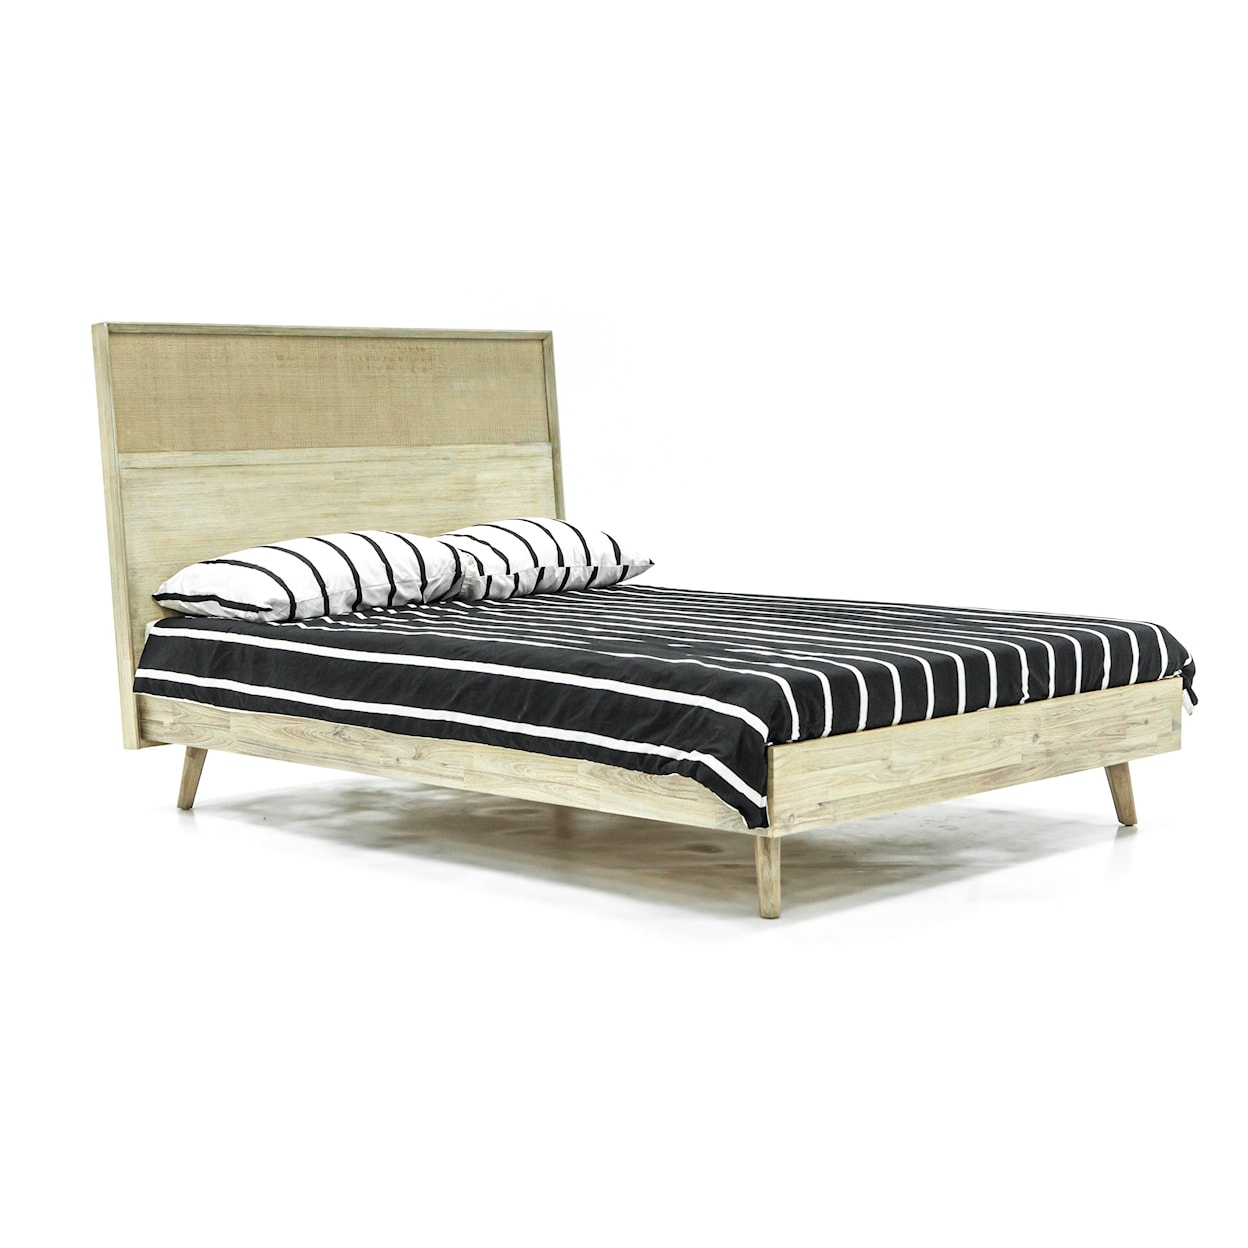 Design Evolution Andes Queen Bed